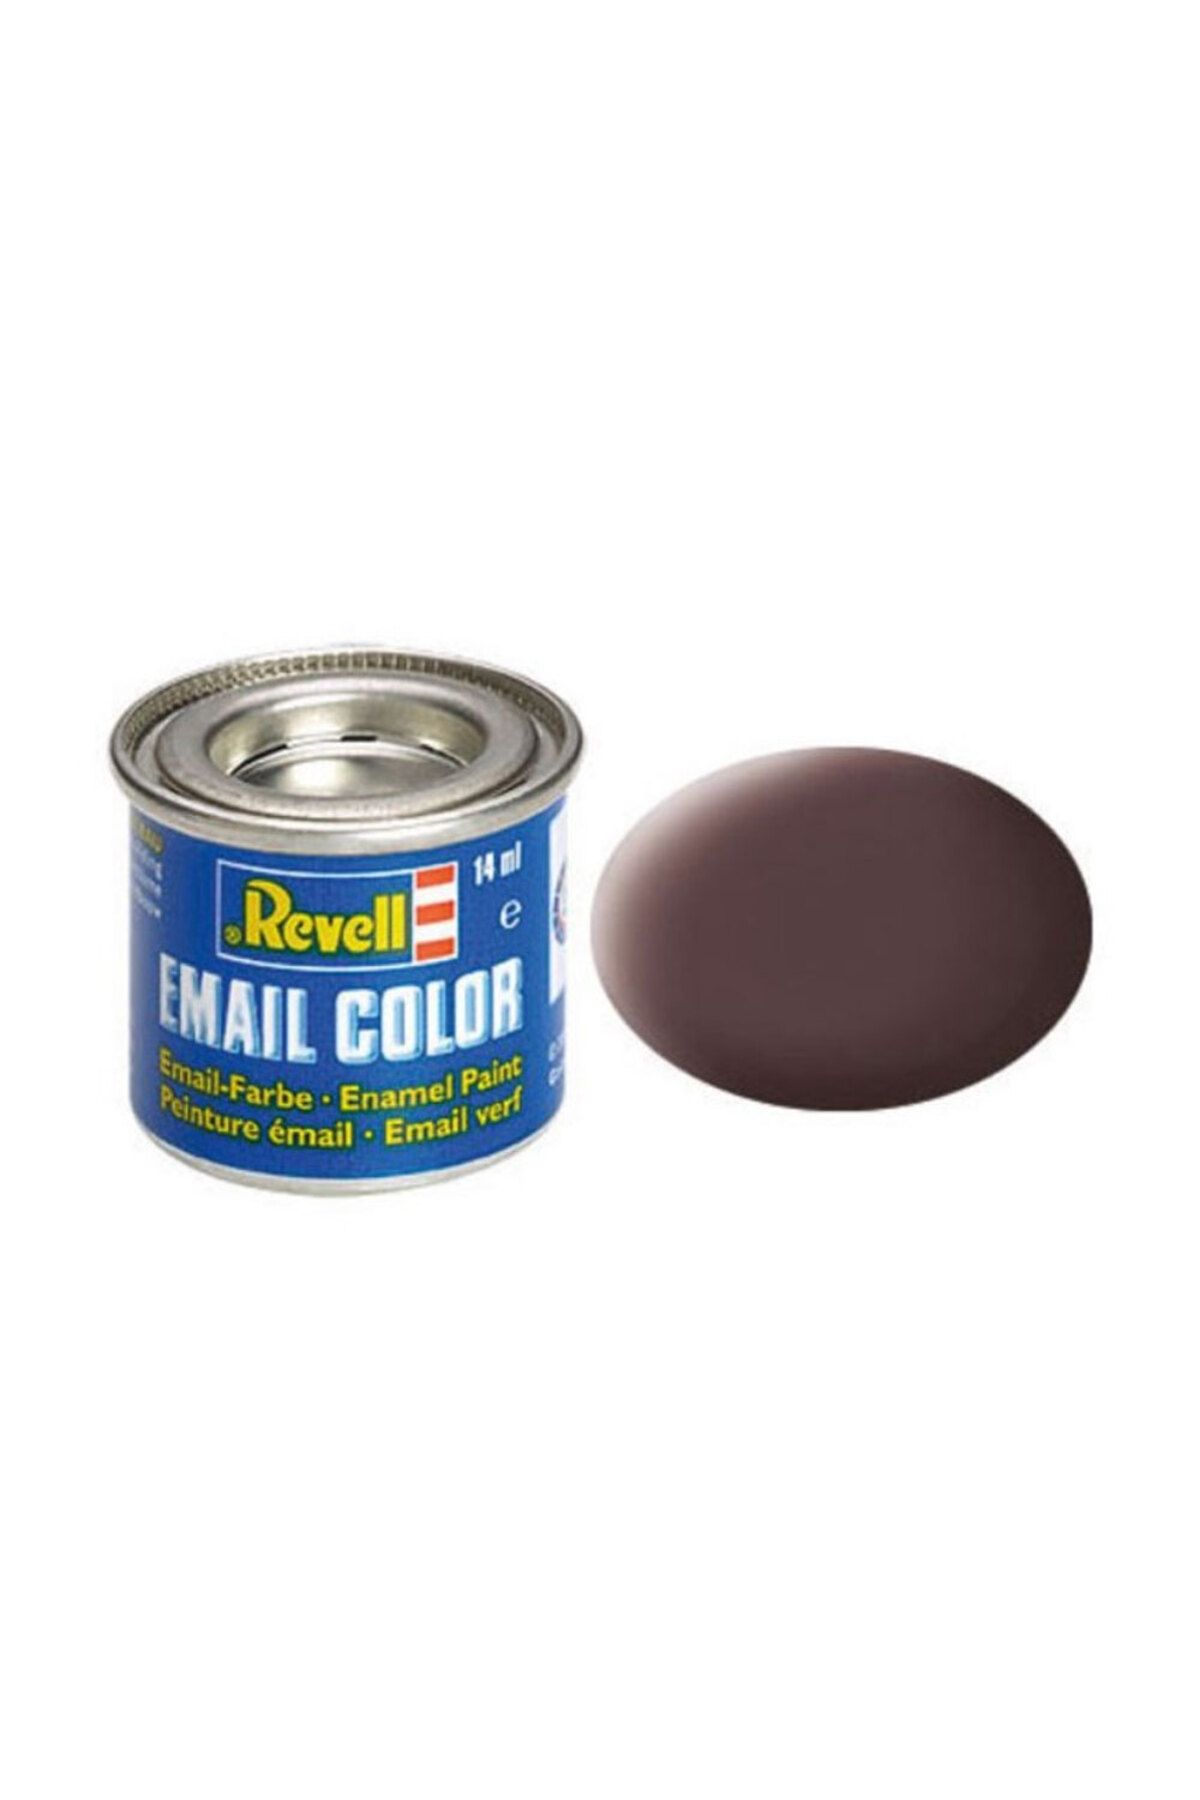 REVELL Maket Boyası Email Color Mat Kahverengi Deri Rengi-32184